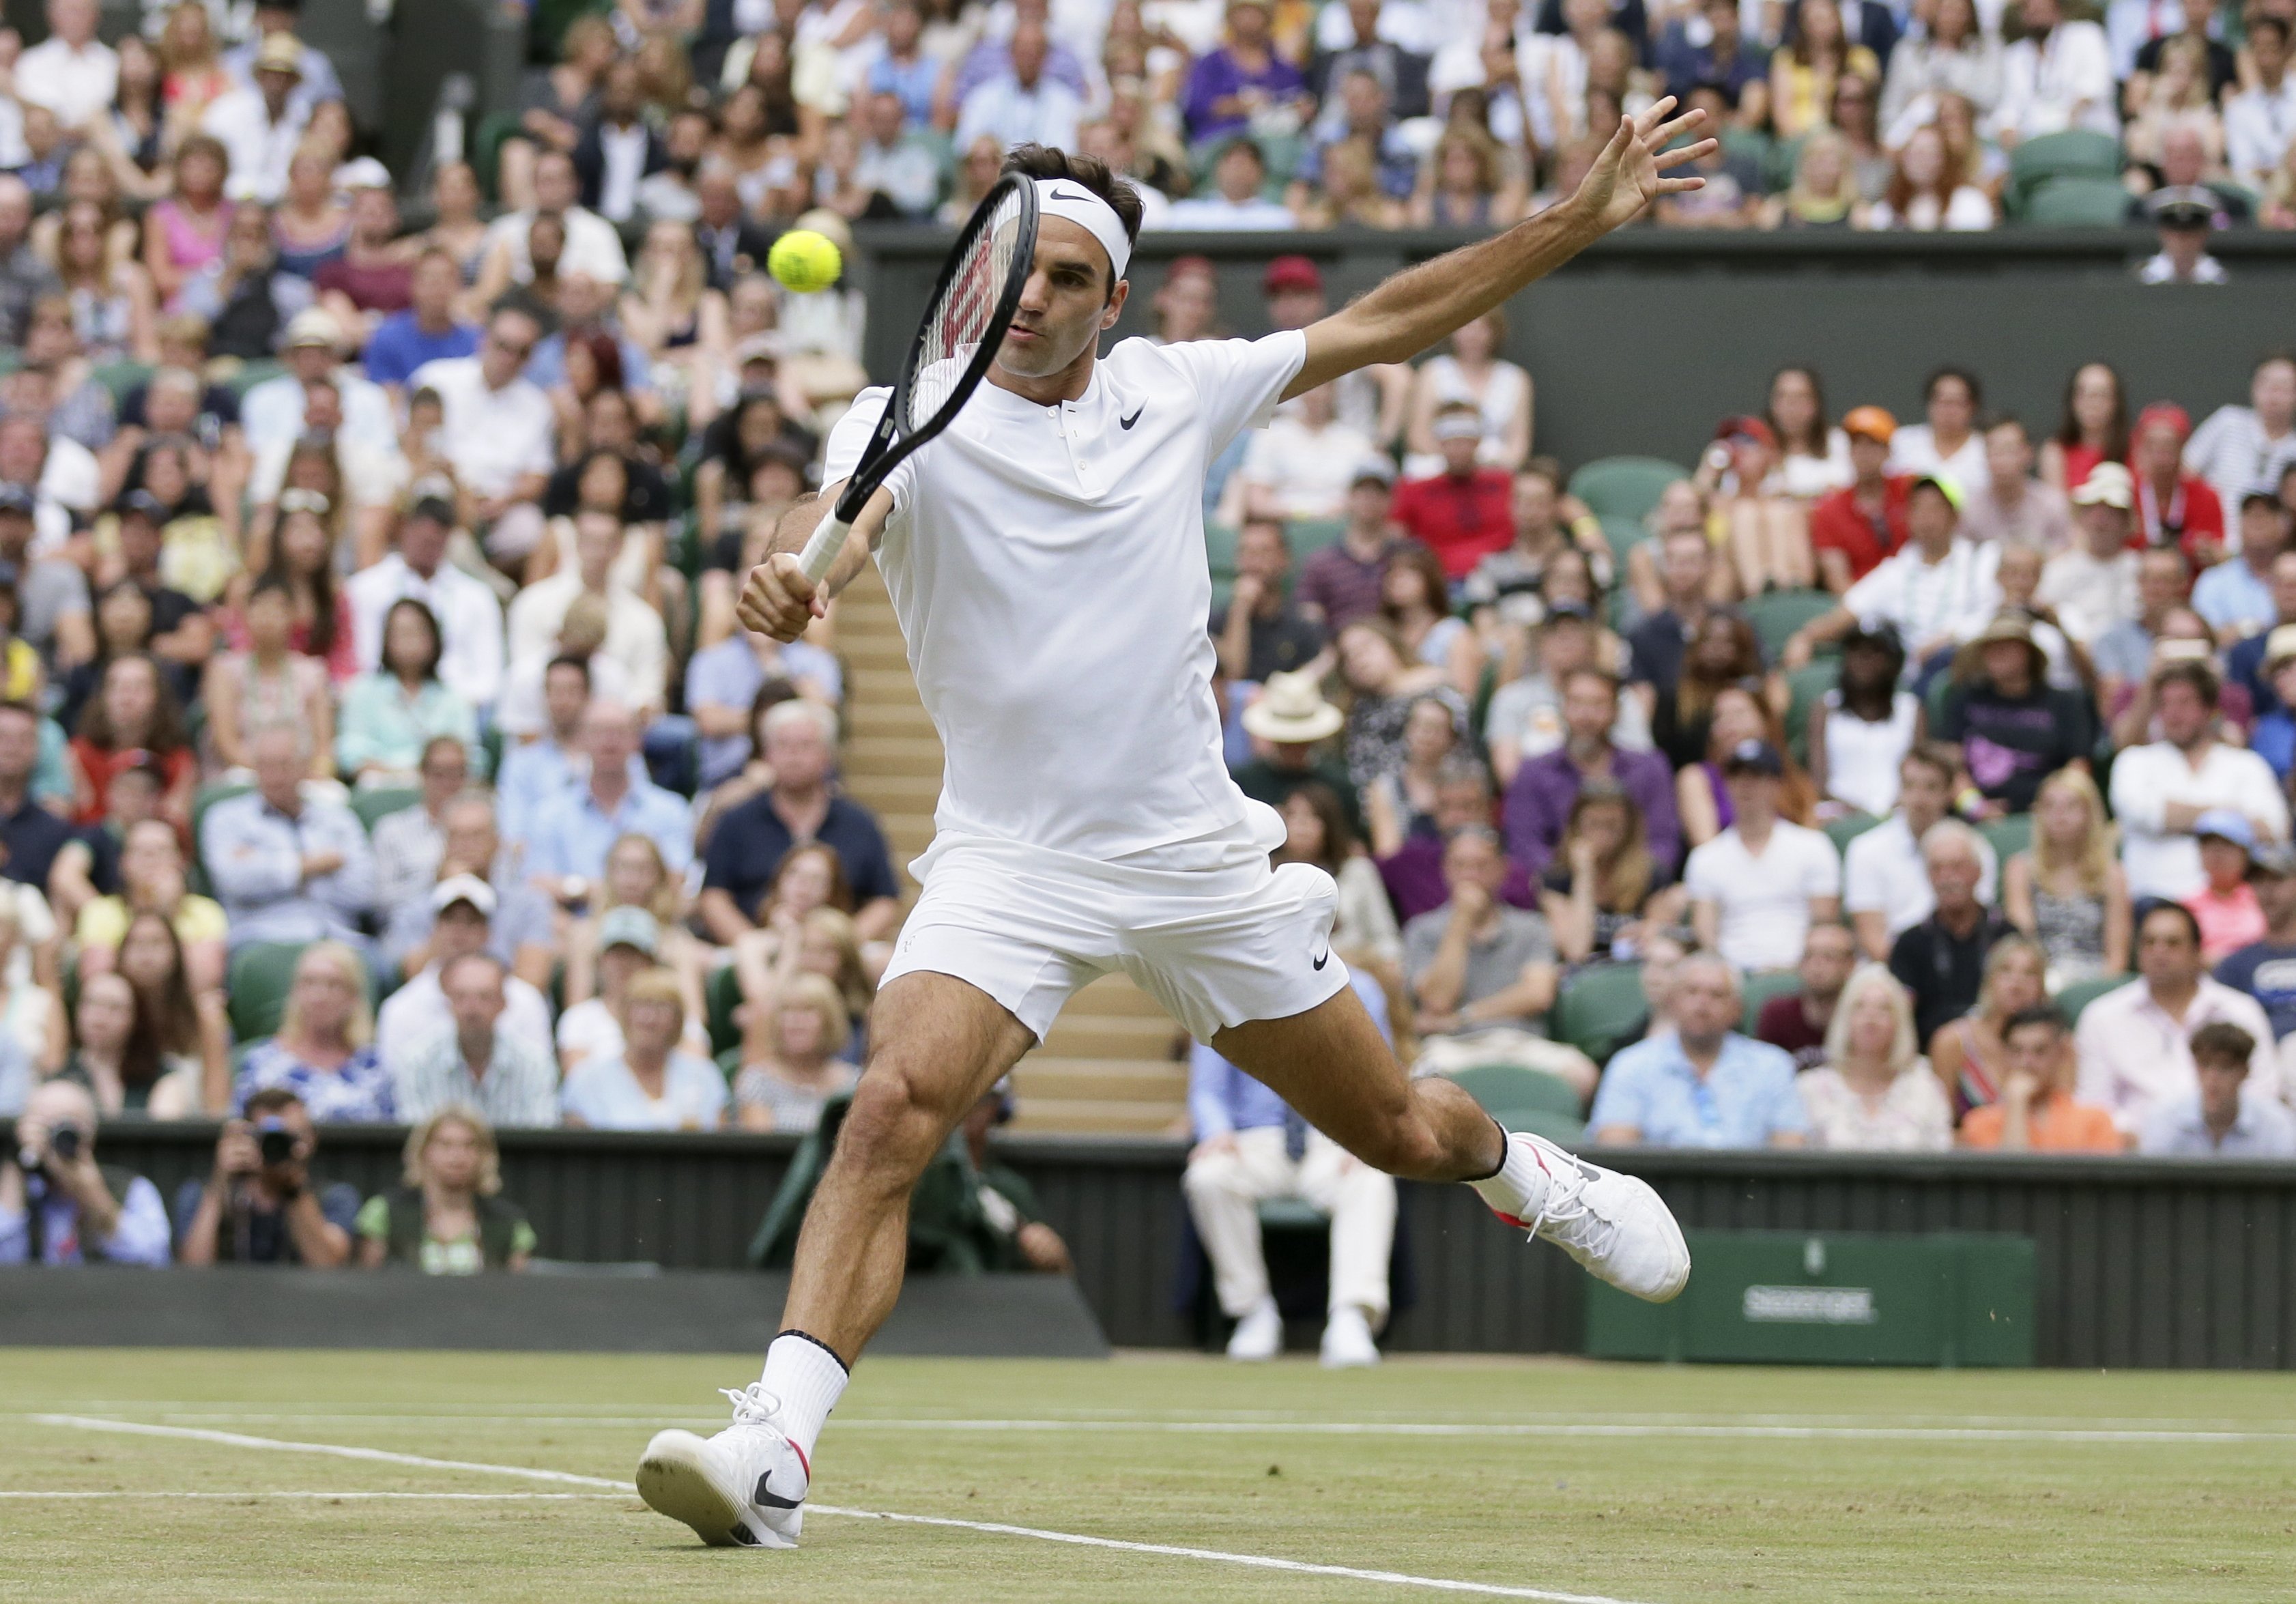 Federer, Djokovic, Nadal, Murray head to Week 2 at Wimbledon | Tennis.com